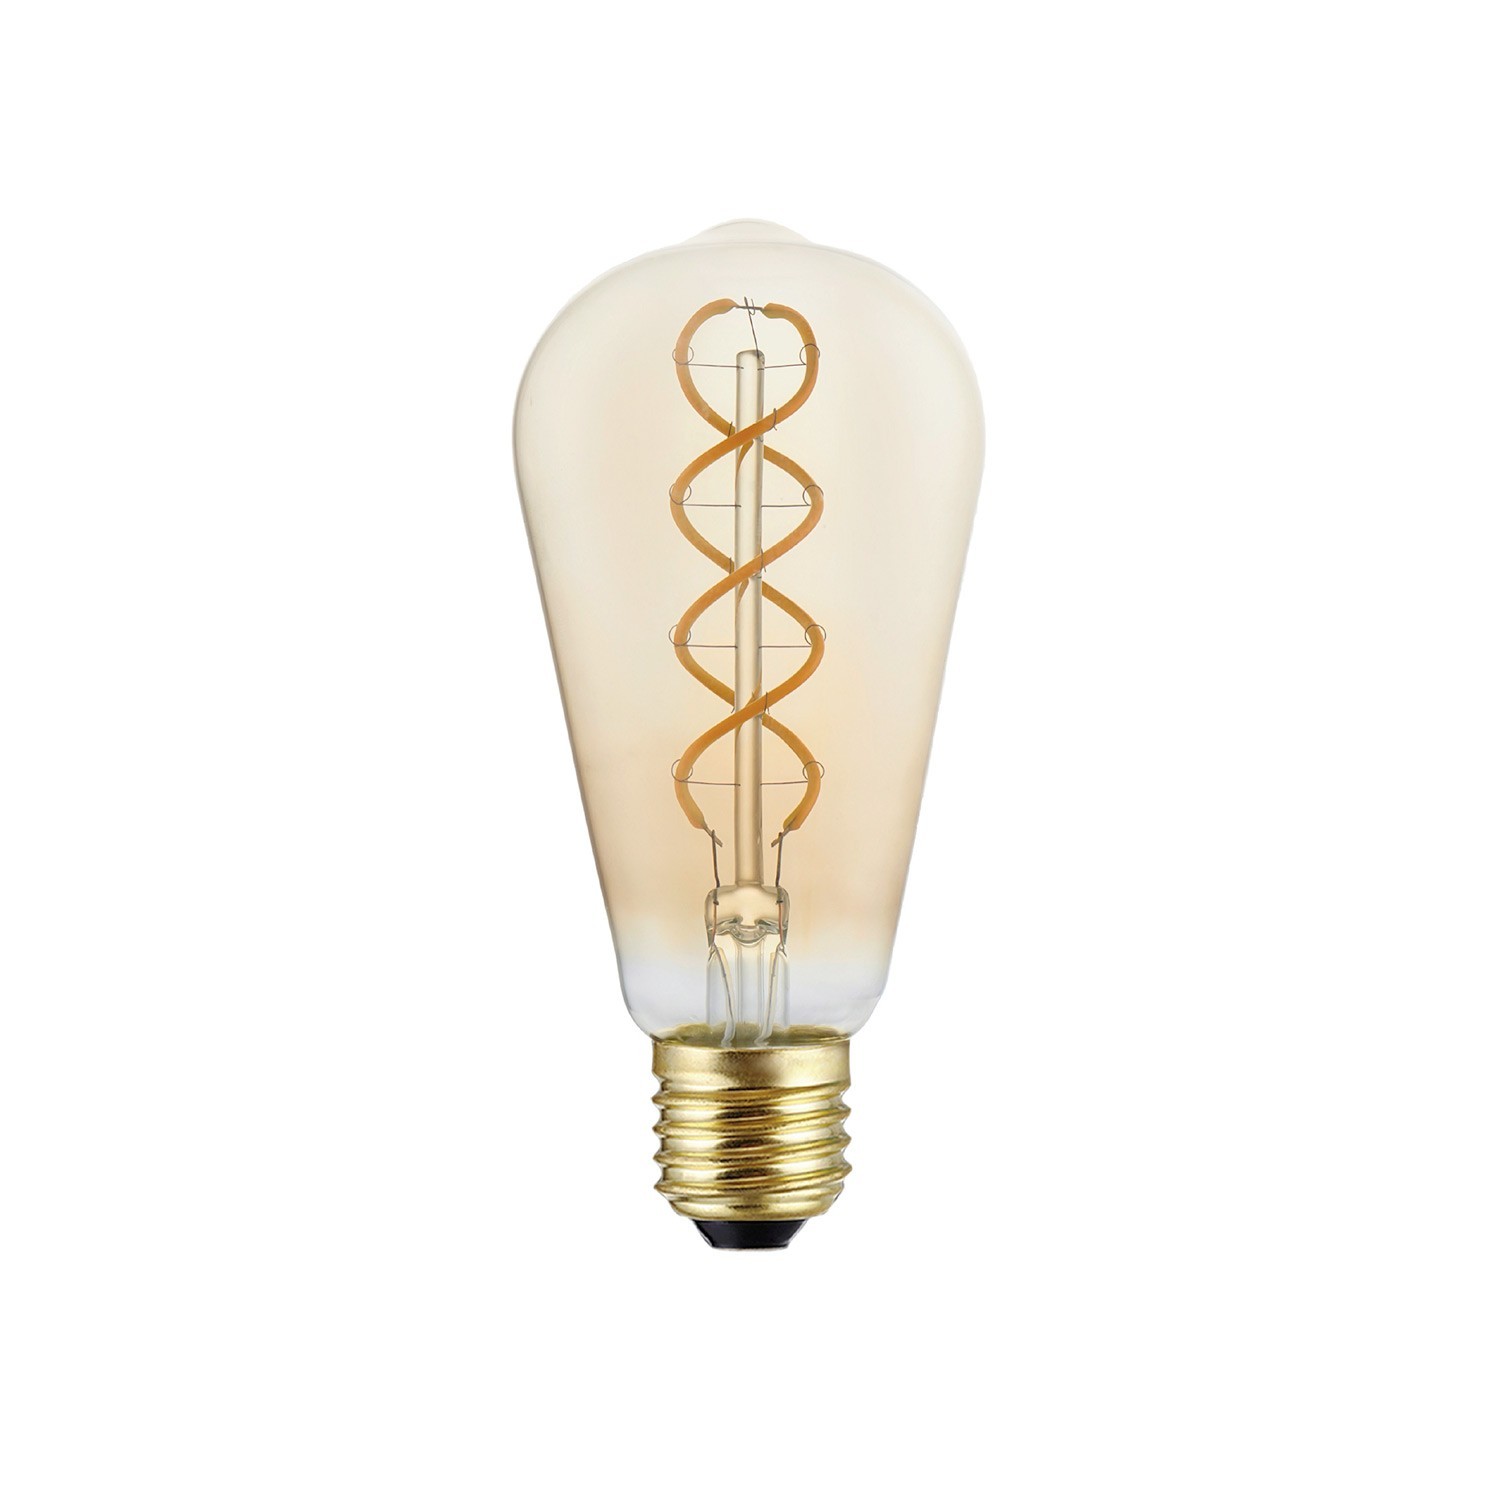 Lampadina LED Dorata Linea 5V filamento a spirale Edison ST64 1,3W 80Lm E27 2500K Dimmerabile - B01